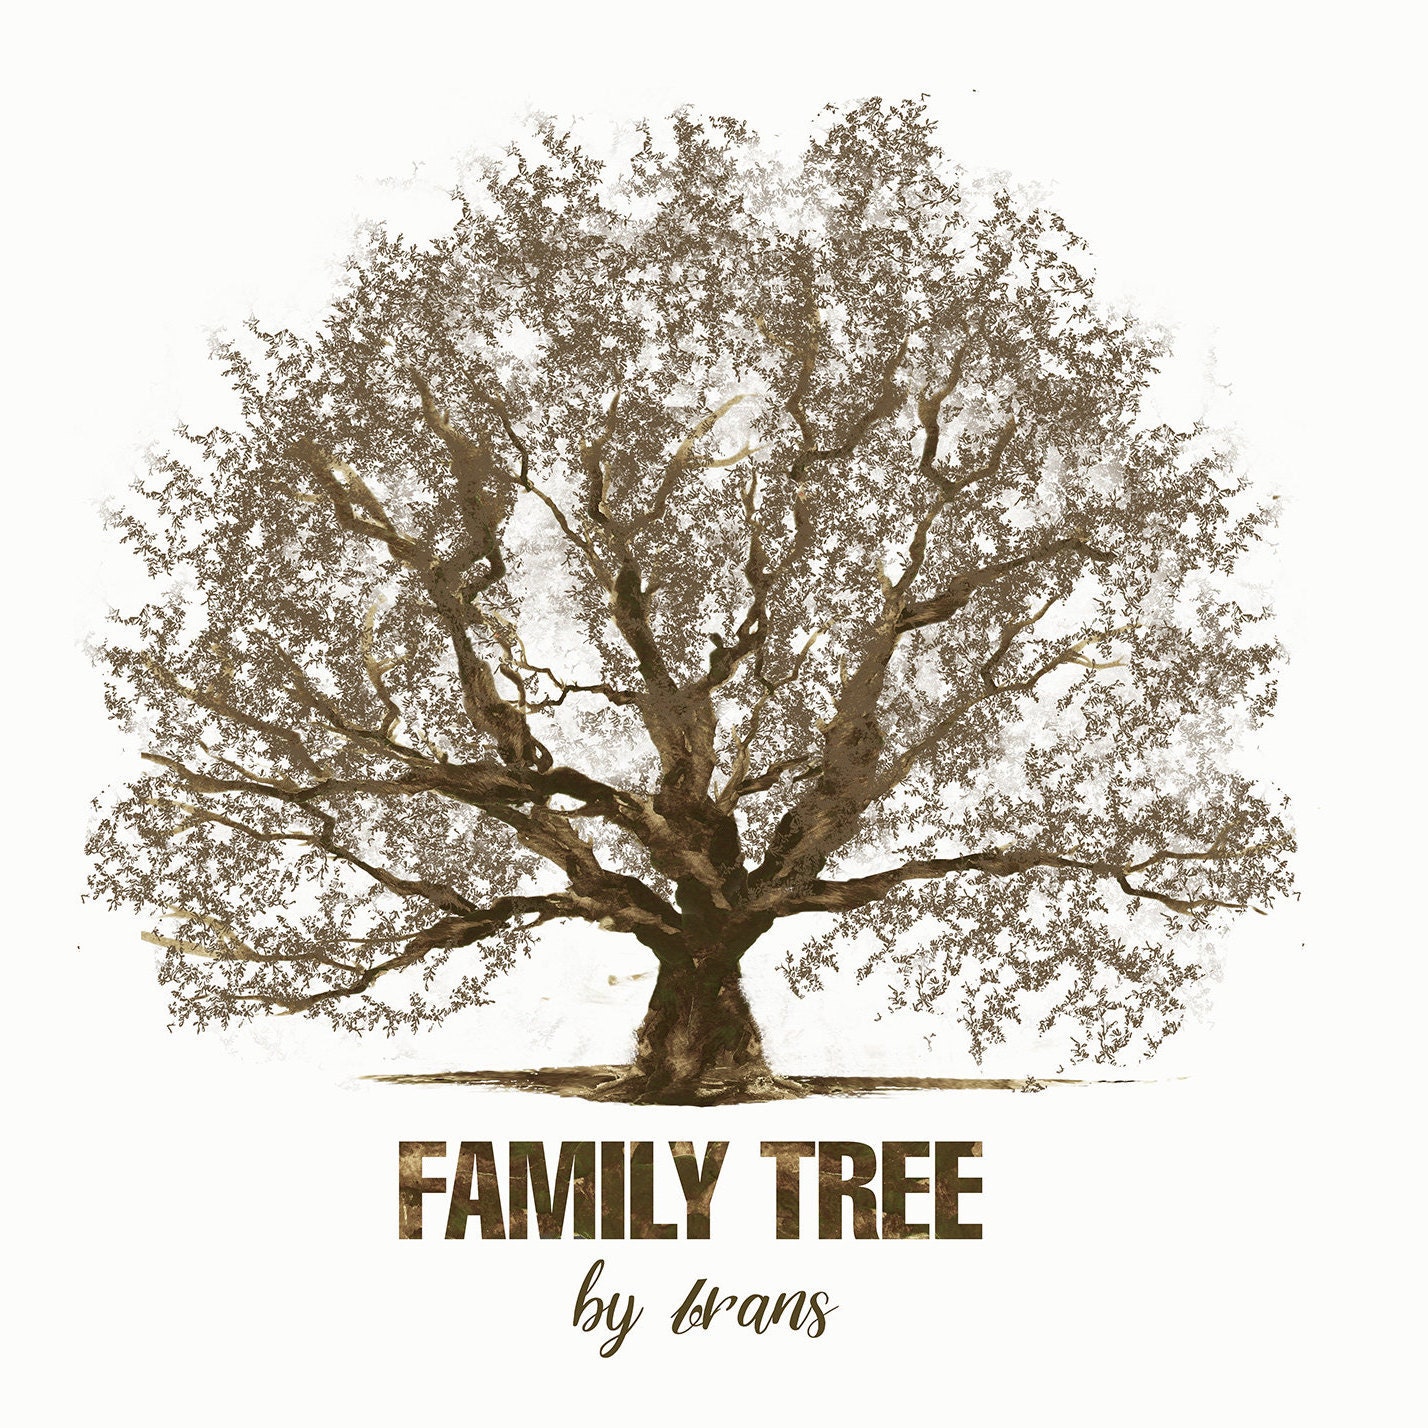 personalized-family-tree-art-by-familytreebybrans-on-etsy